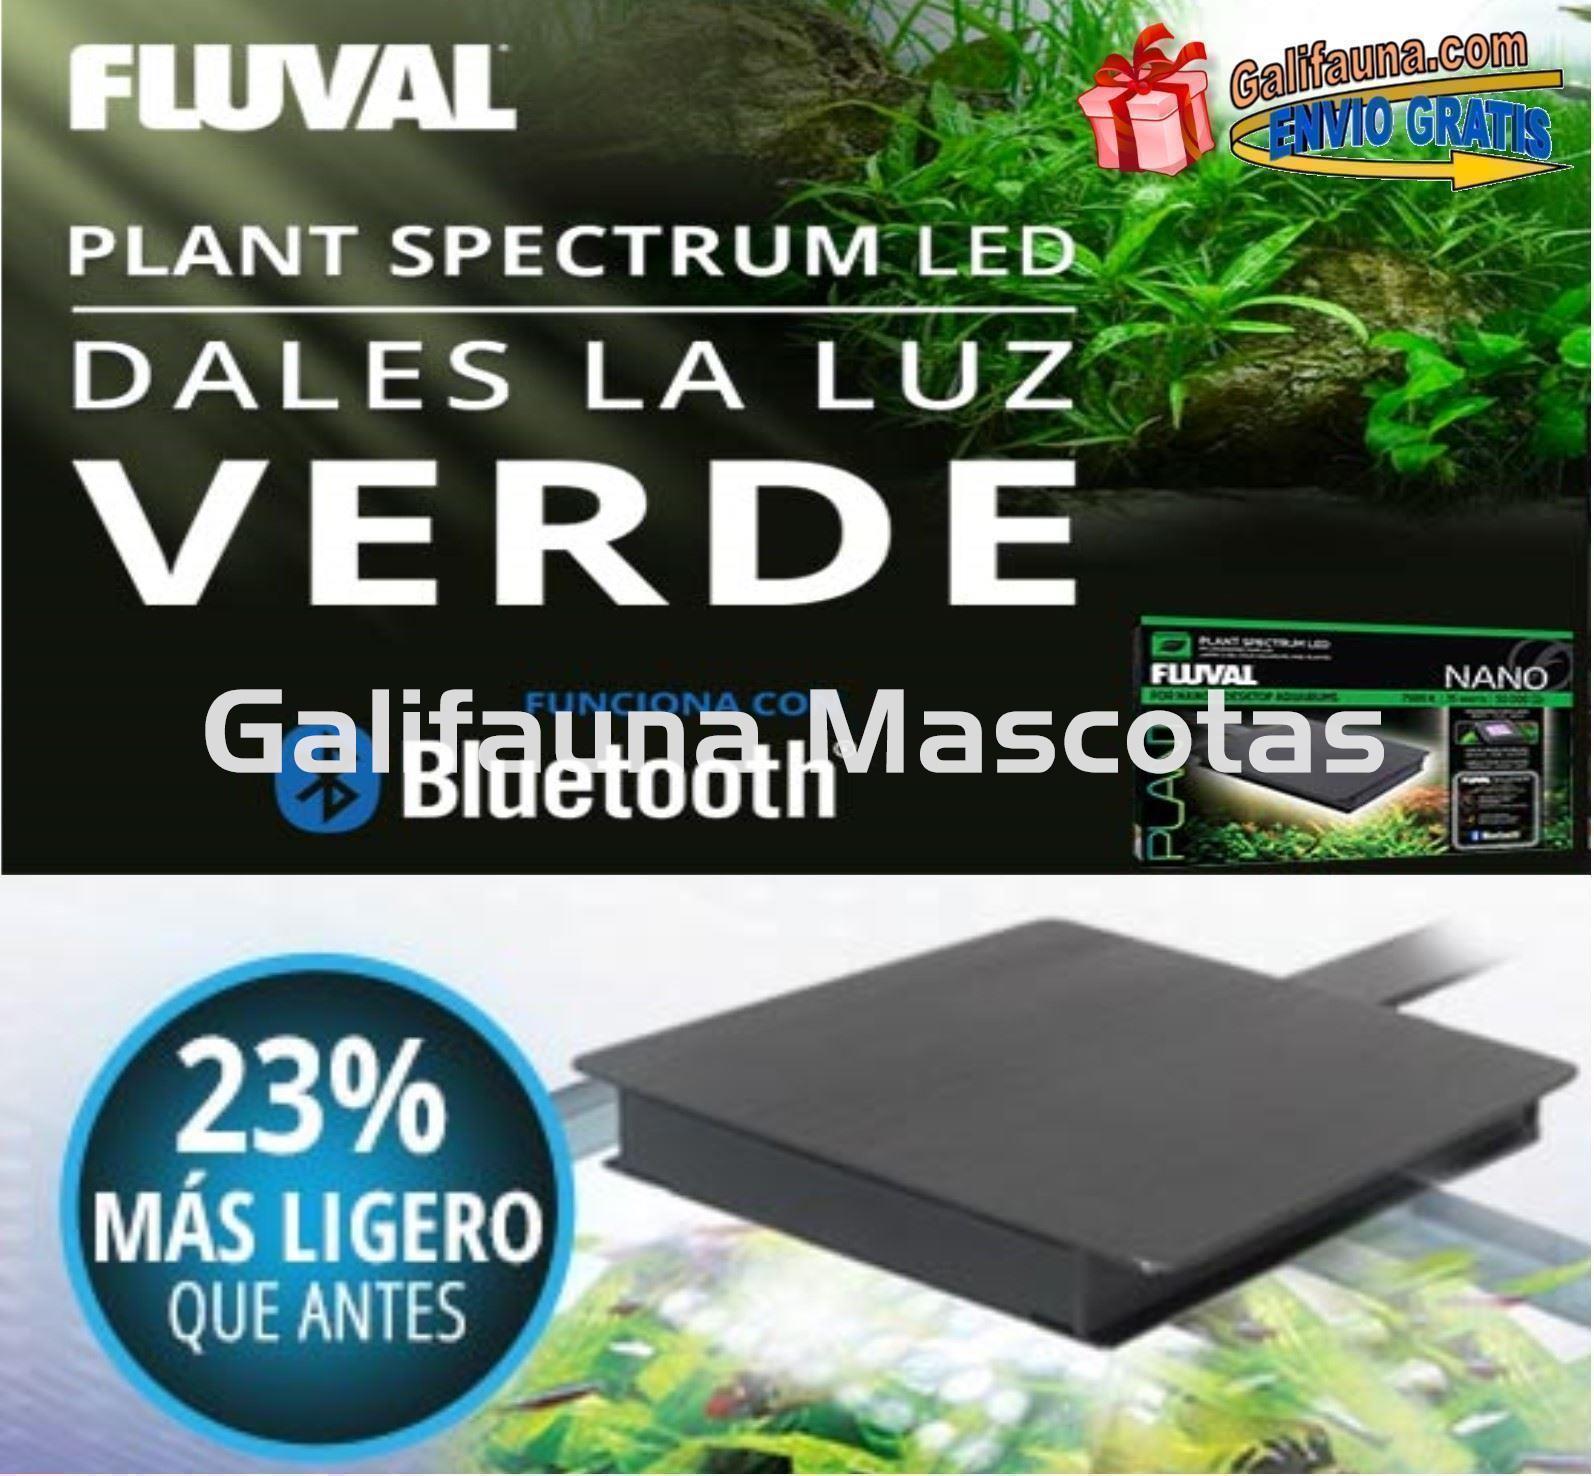 PANTALLA LED BLUETOOTH FLUVAL PLANT SPECTRUM 3. Especial plantación. APP Fluval. Brazos extensibles. - Imagen 12